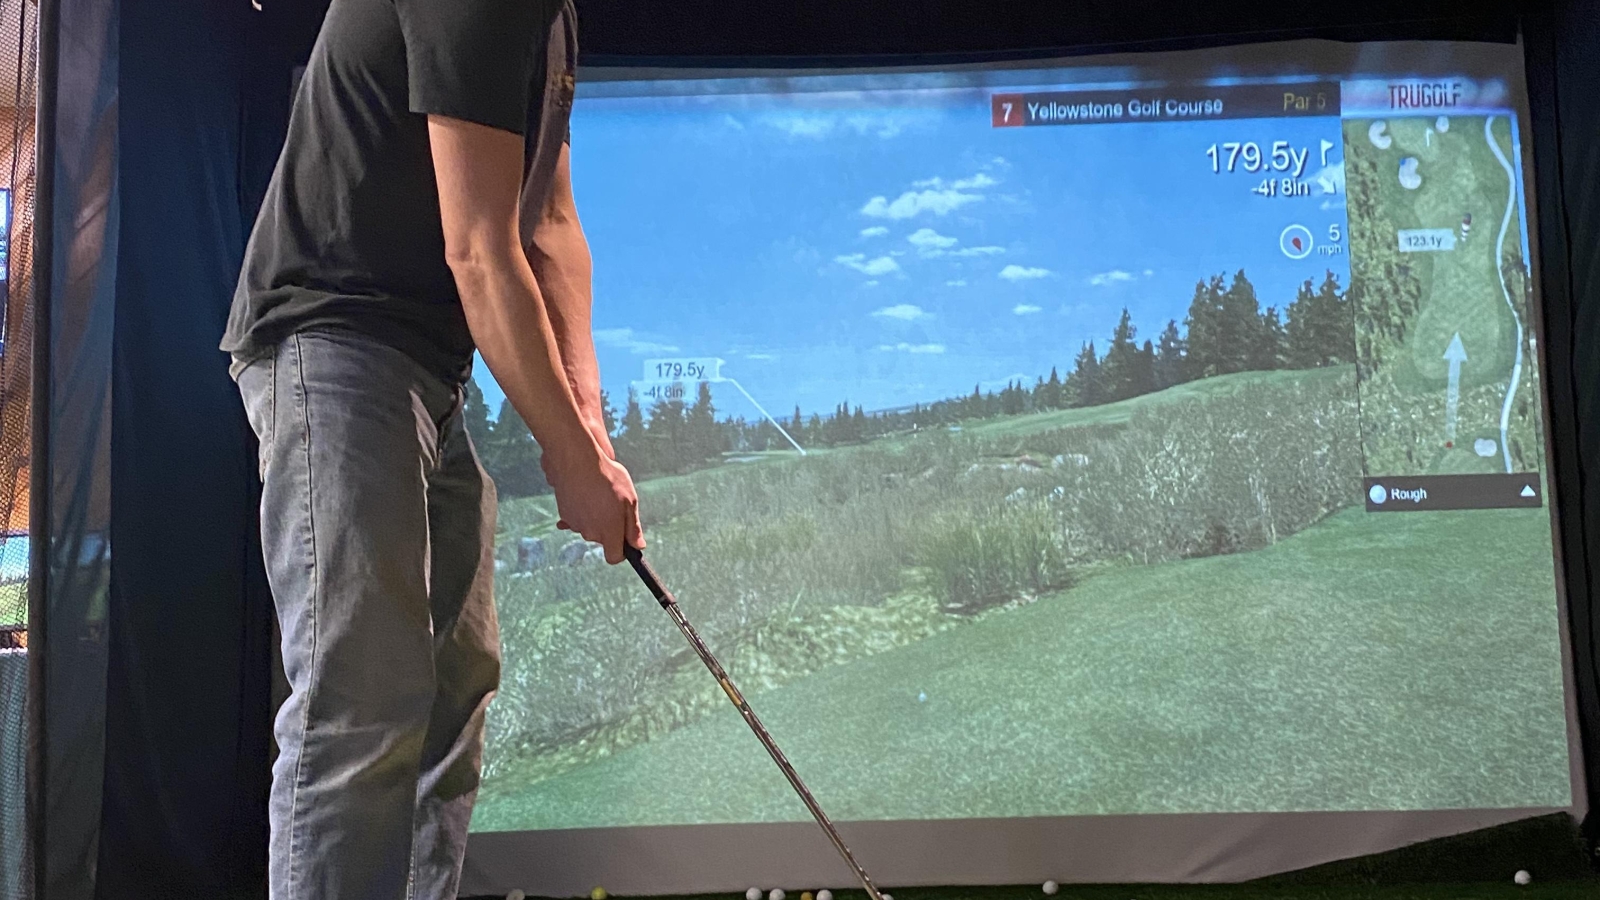 Golfer using the simulator